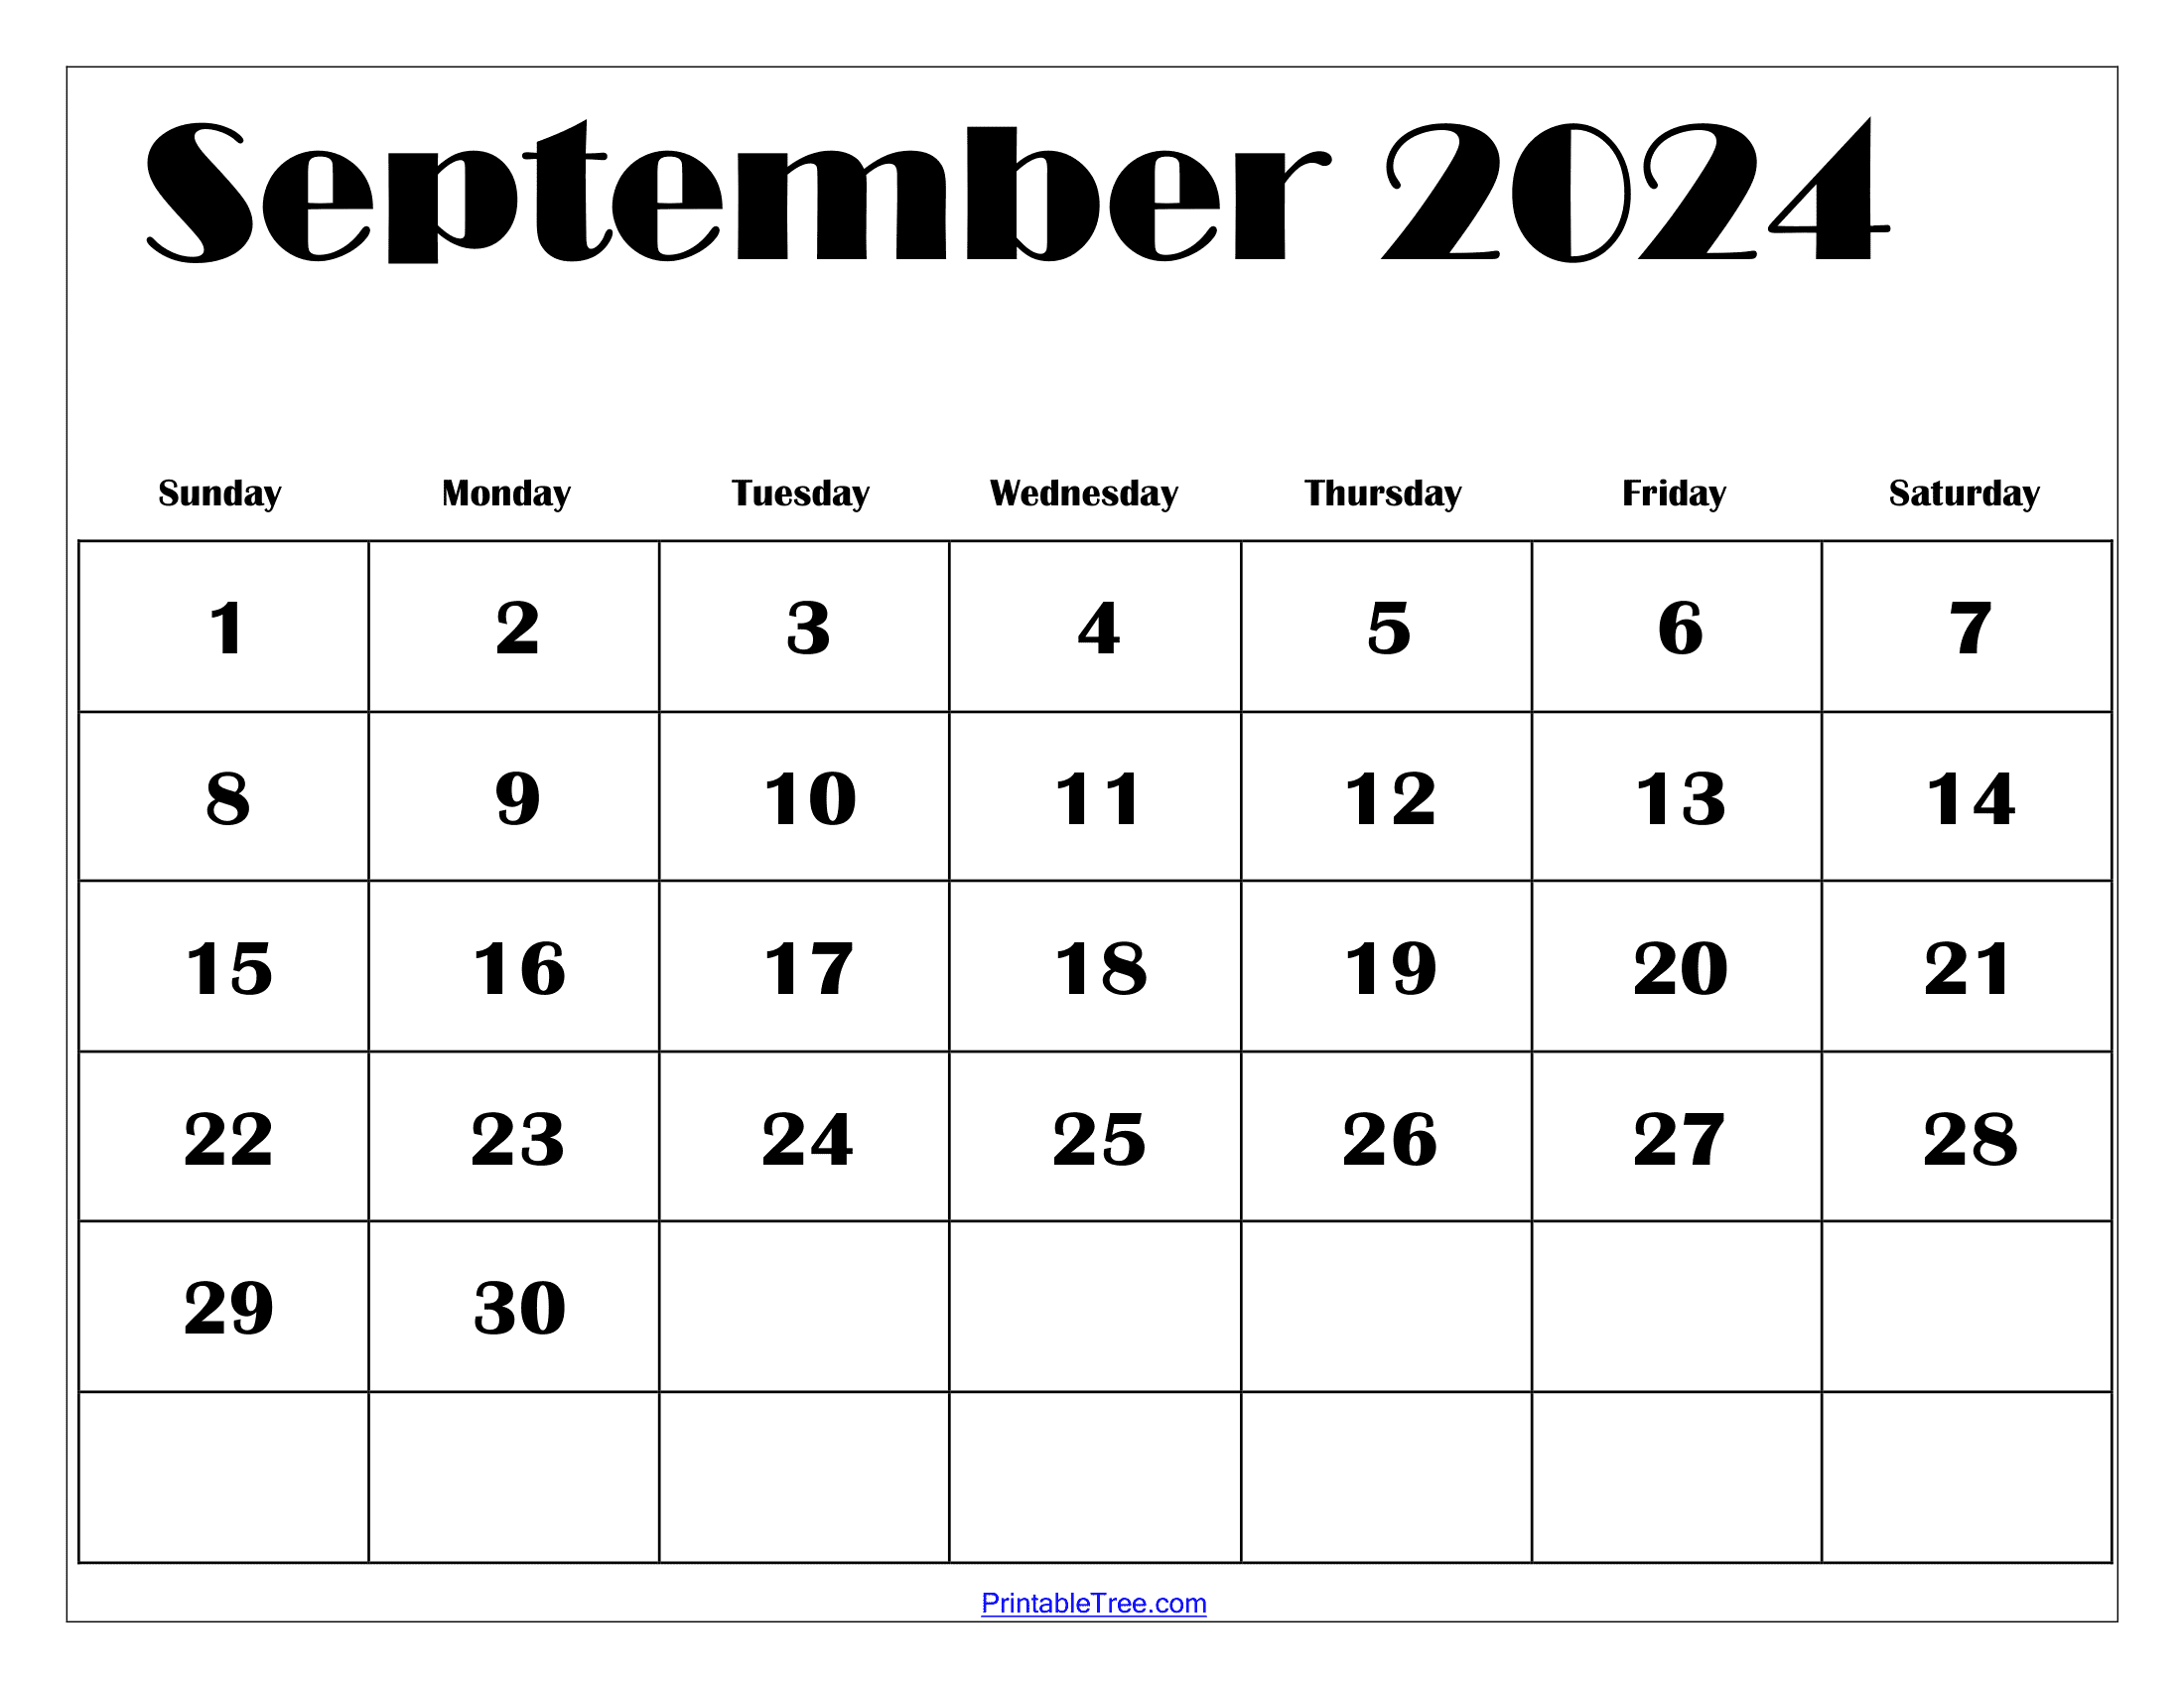 September 2024 Calendar Printable Pdf With Holidays for Printable September 2024 Calendar Page